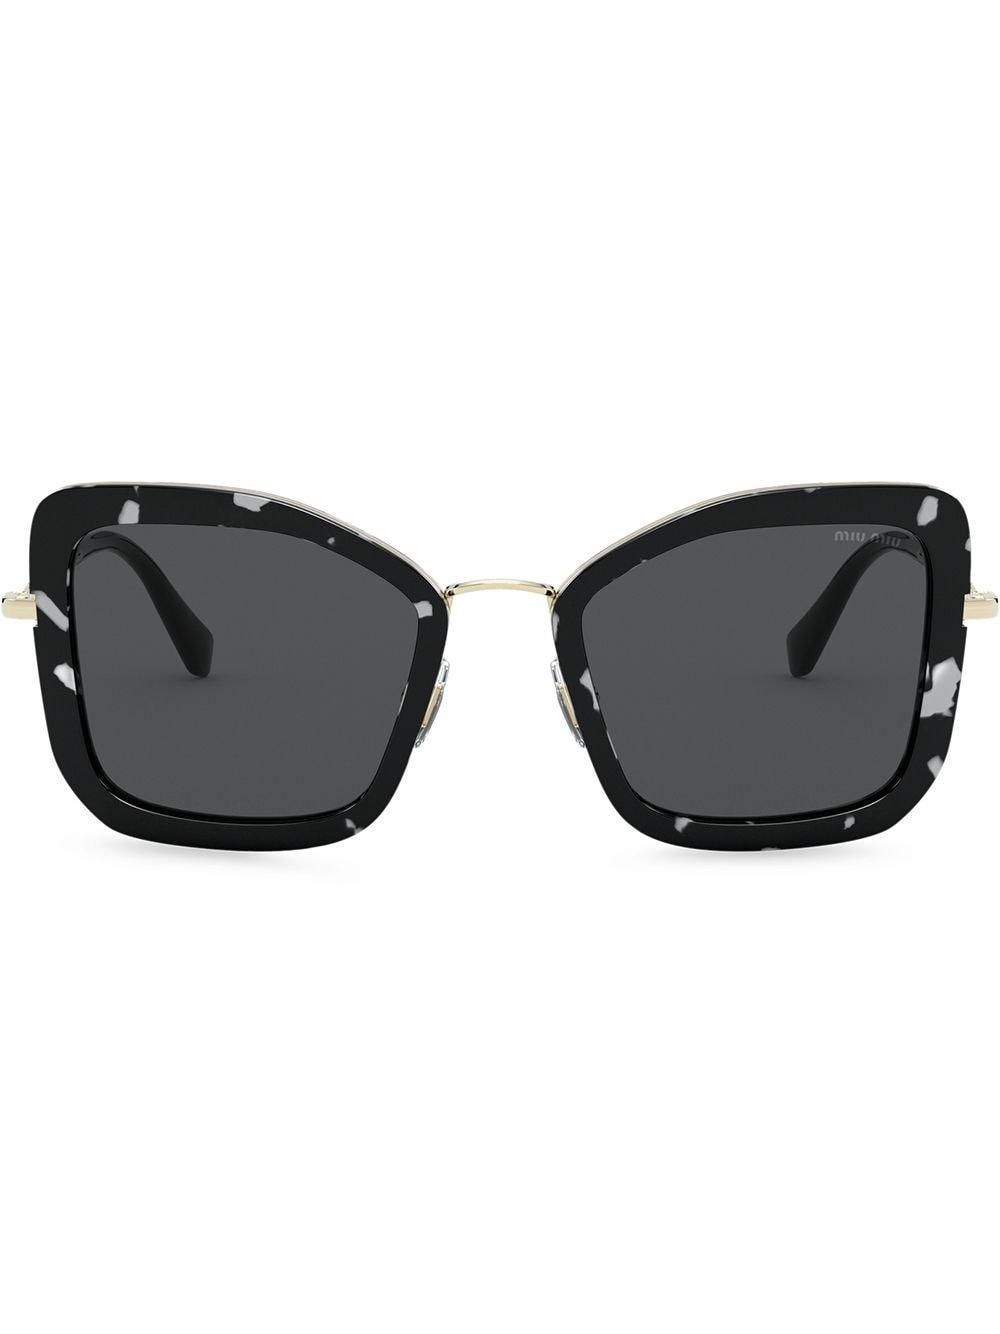 Download Miu Miu Butterfly Sunglasses in Black - Lyst